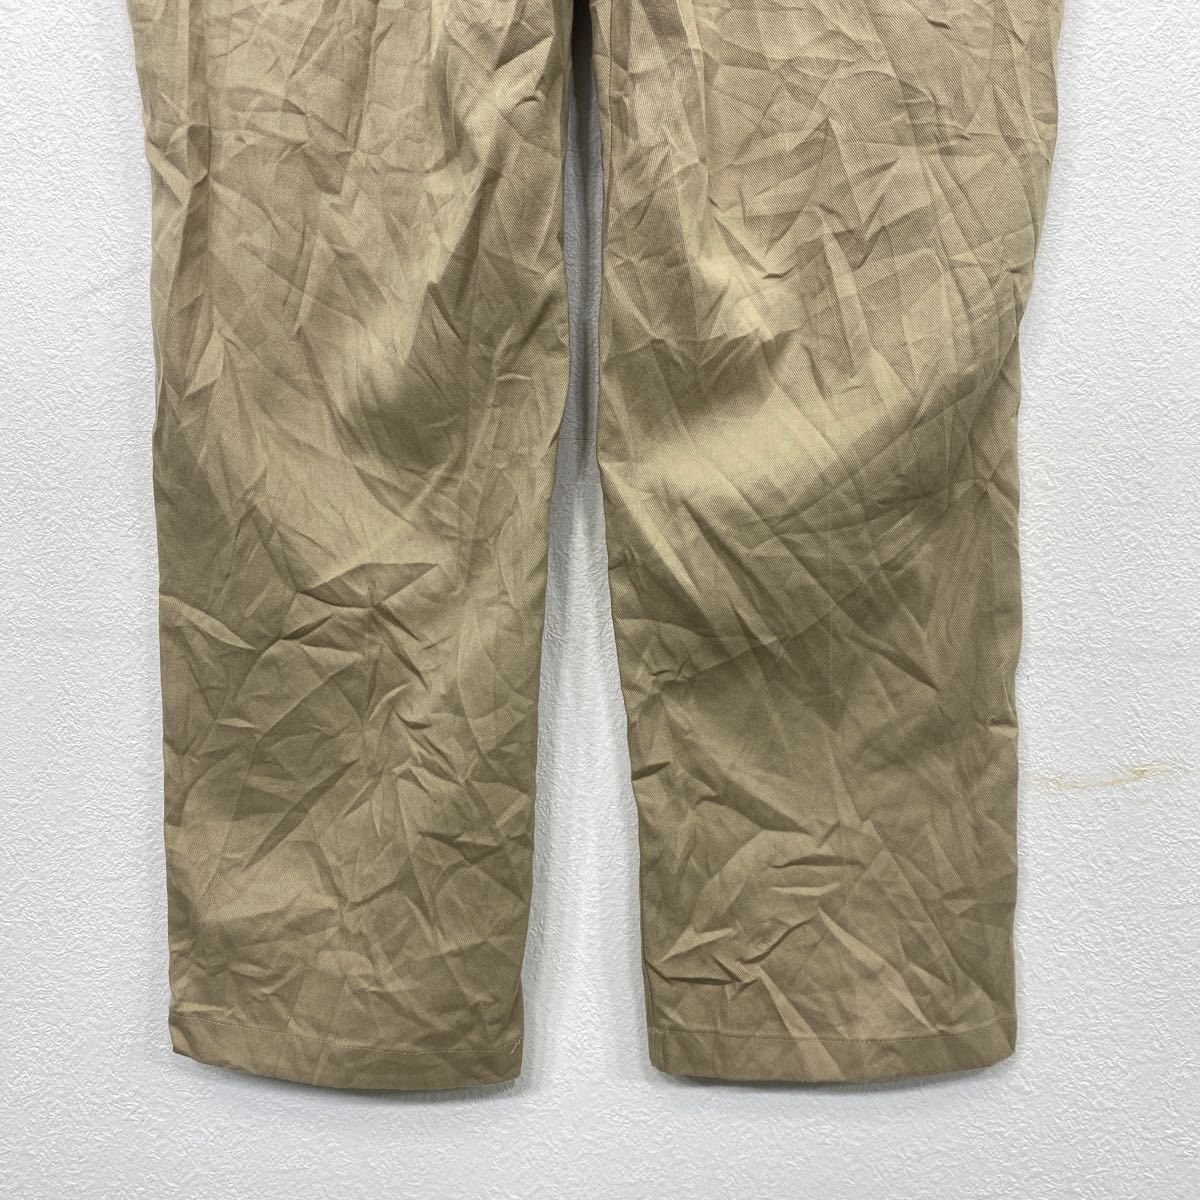 Dickies рабочие брюки W44 Dickies 874 оригинал Fit большой размер бежевый б/у одежда . America скупка 2312-285